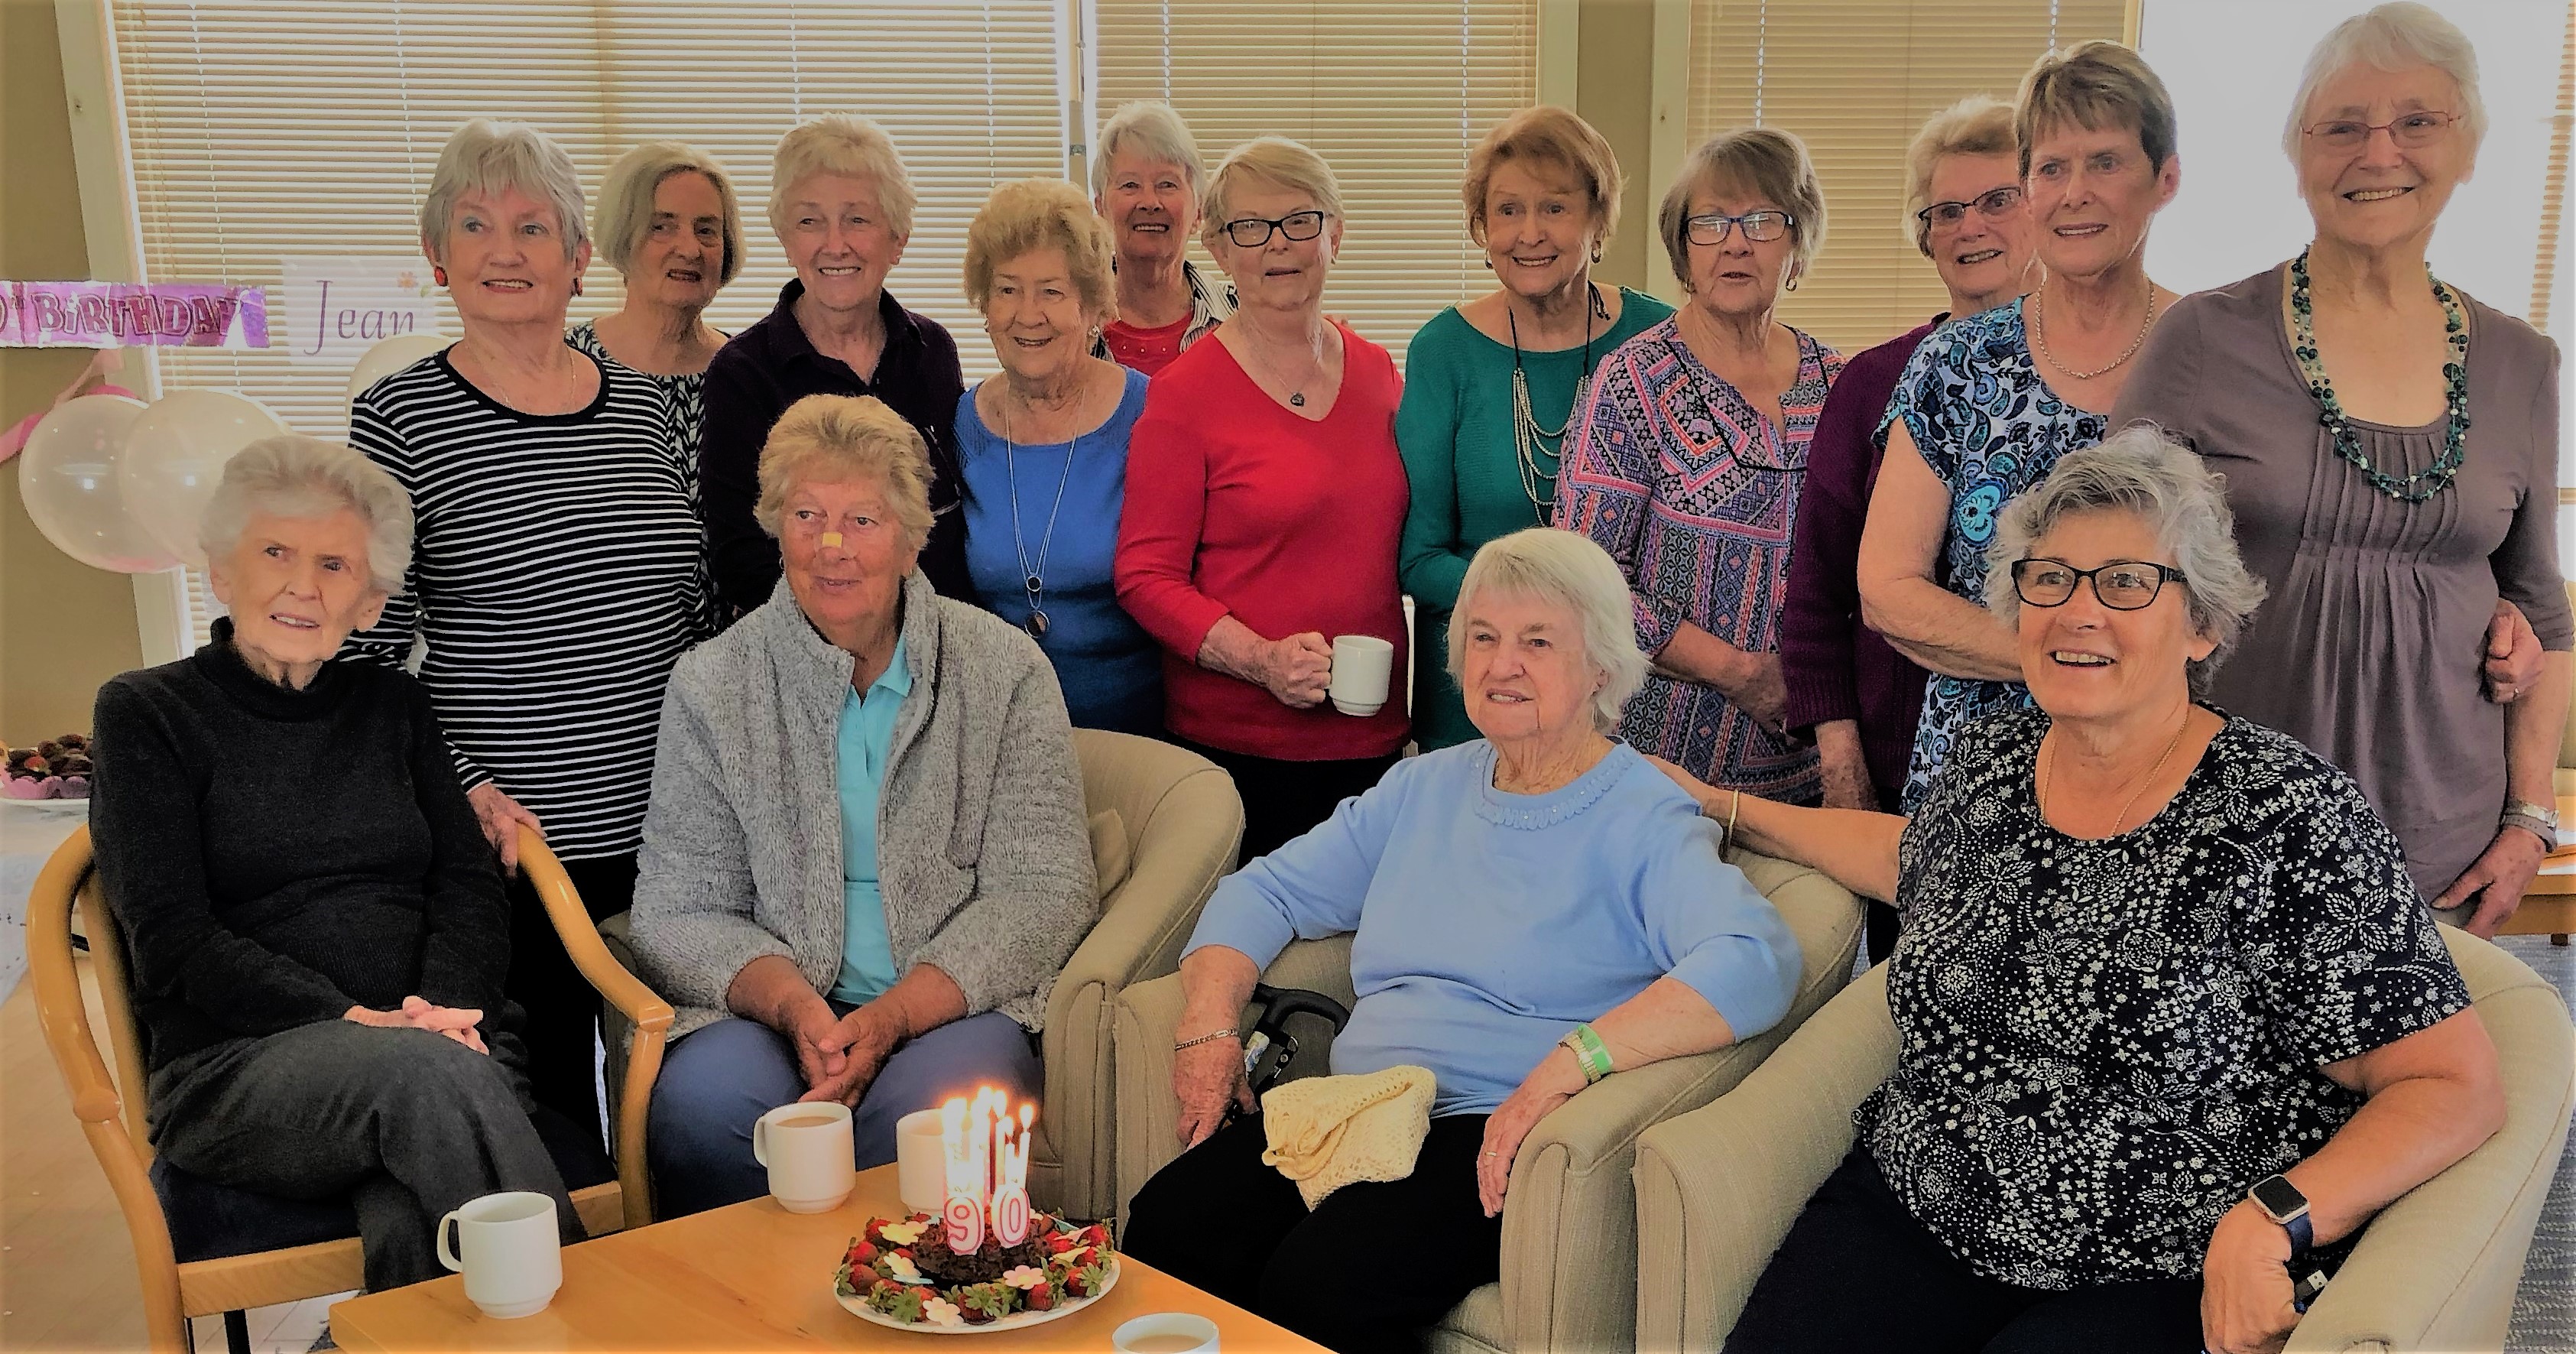 Jean's 90th birthday celebration